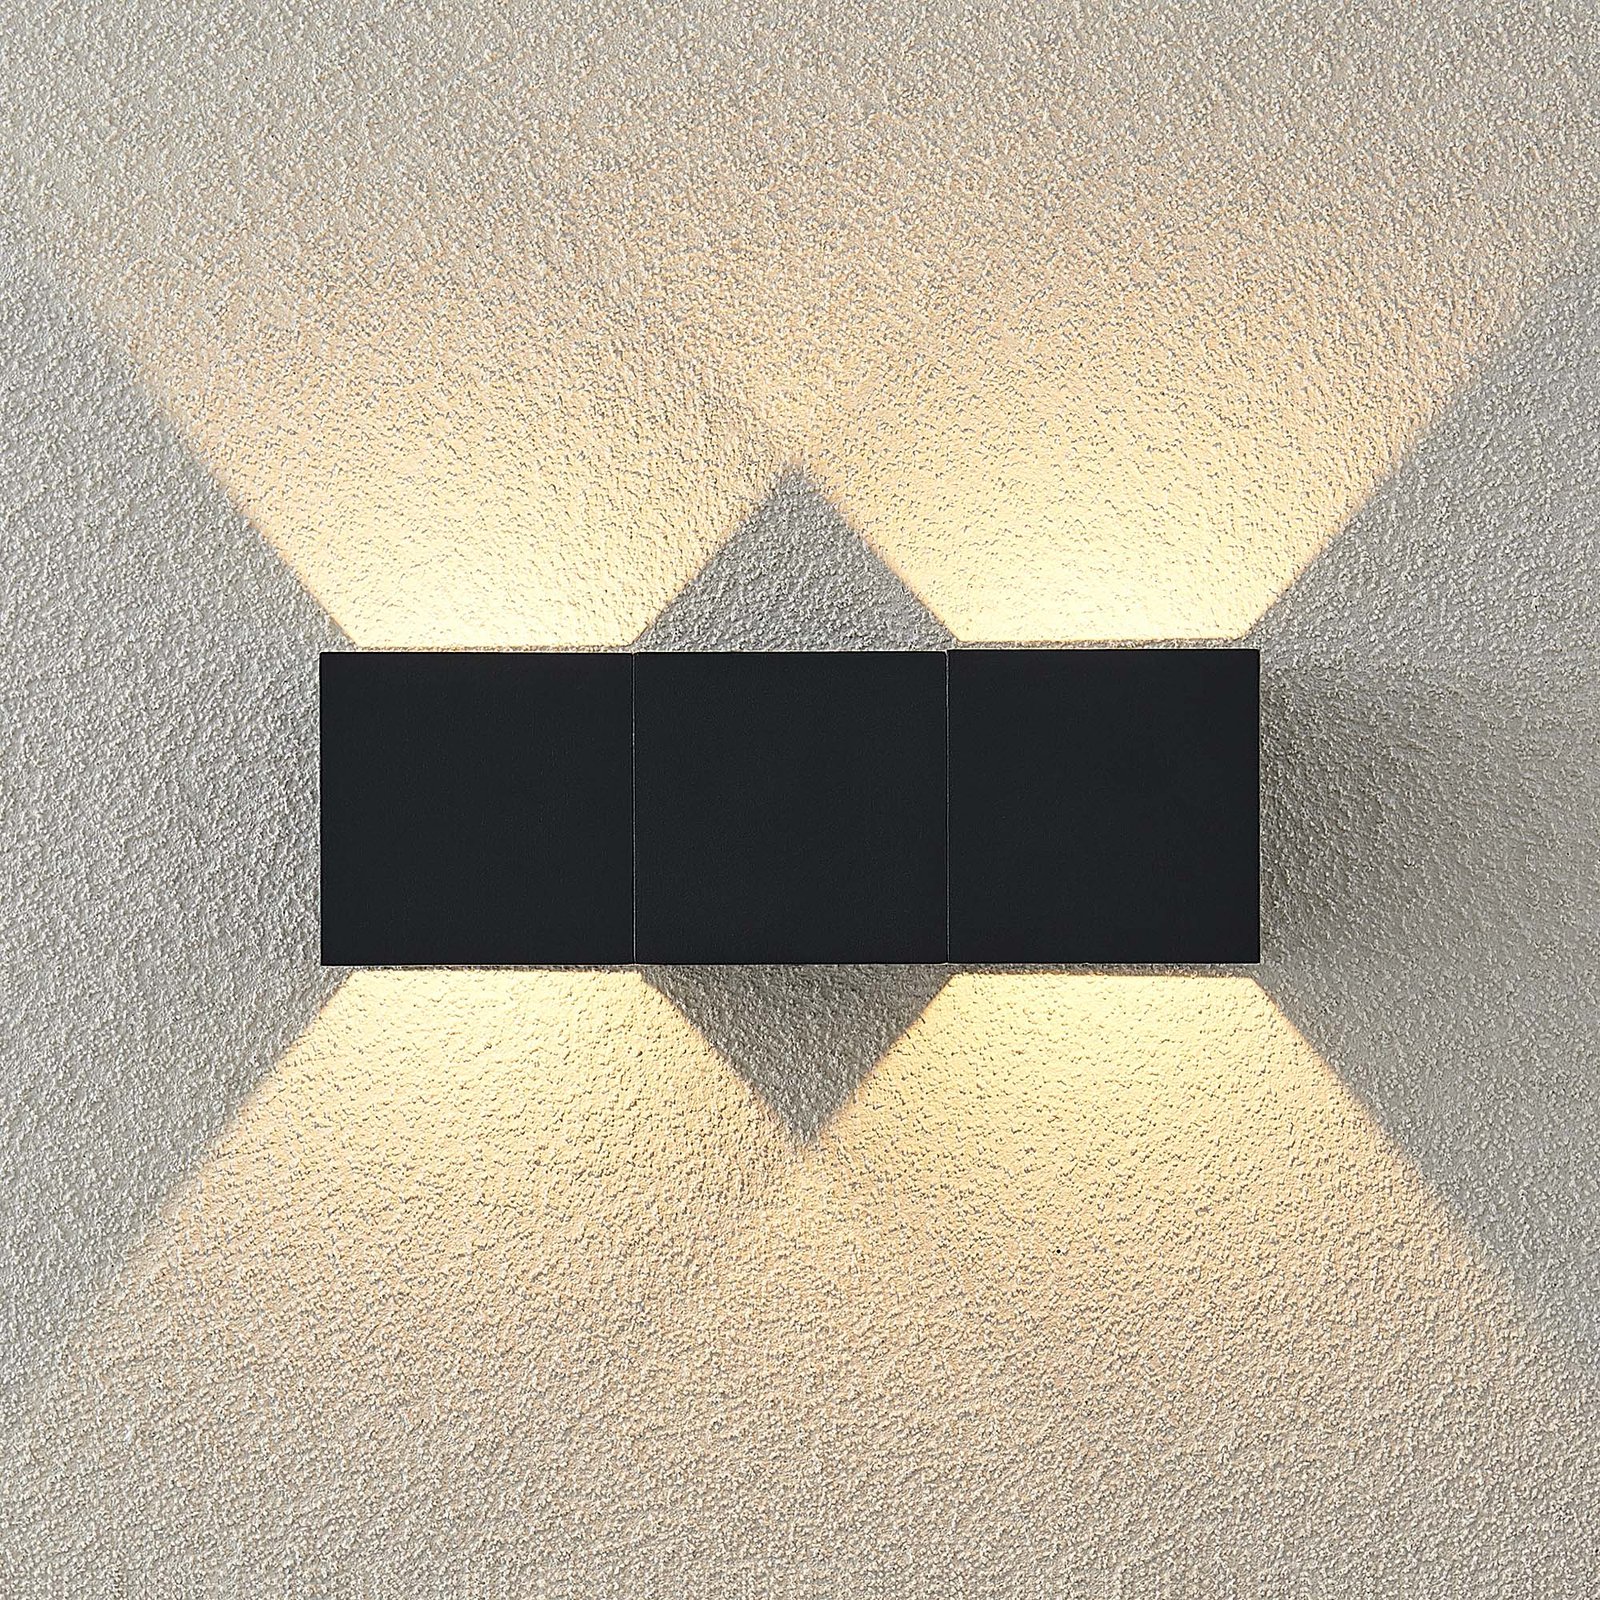 ELC Vanda LED outdoor wall light, anthracite